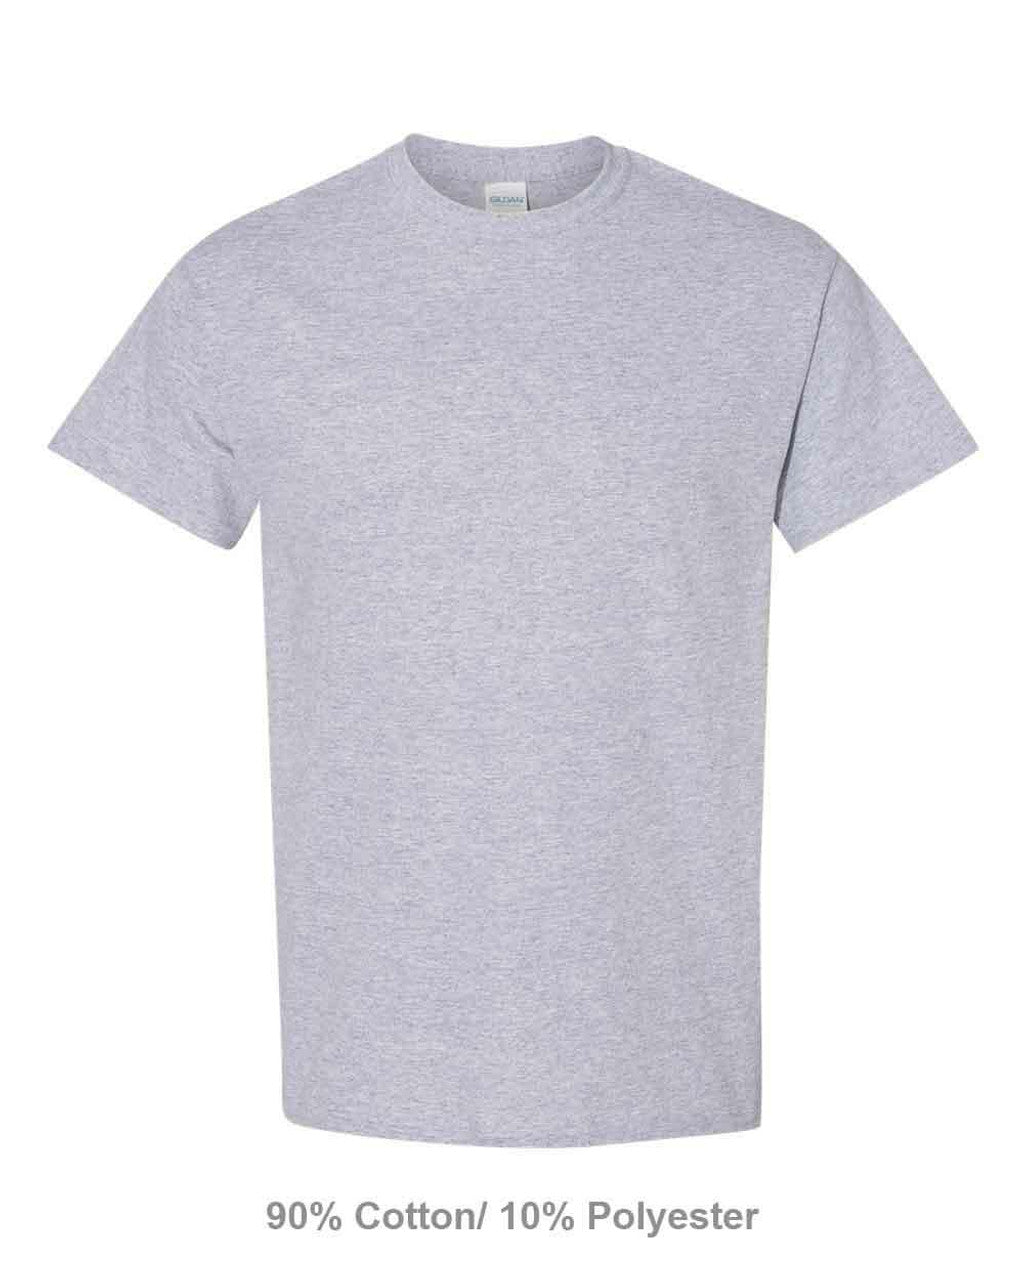 Custom Unisex T-Shirt